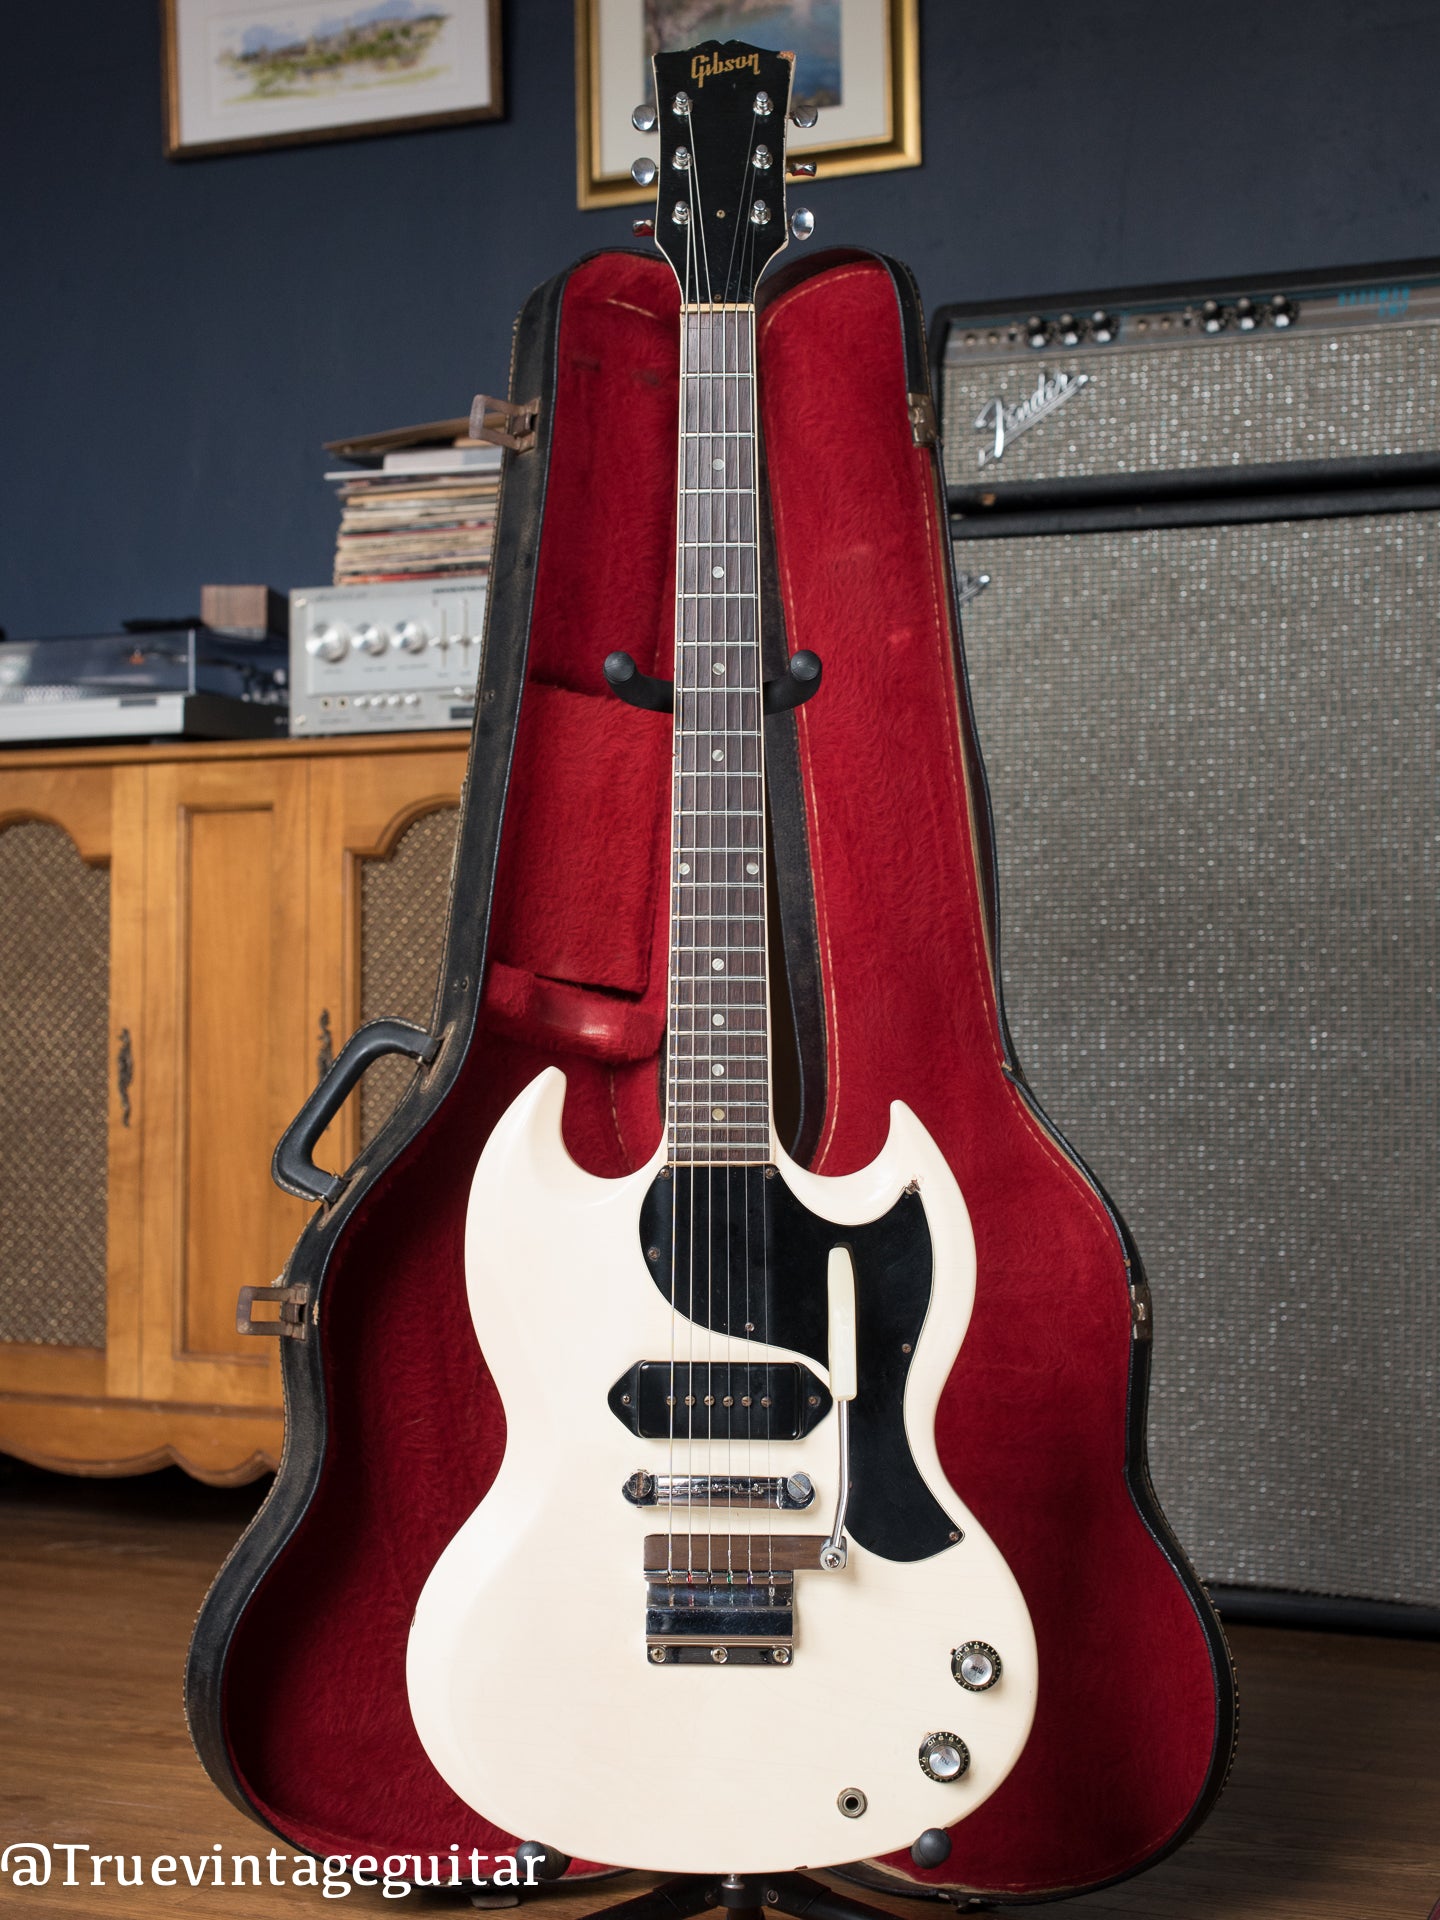 1967 Gibson SG Junior White TV vintage electric guitar